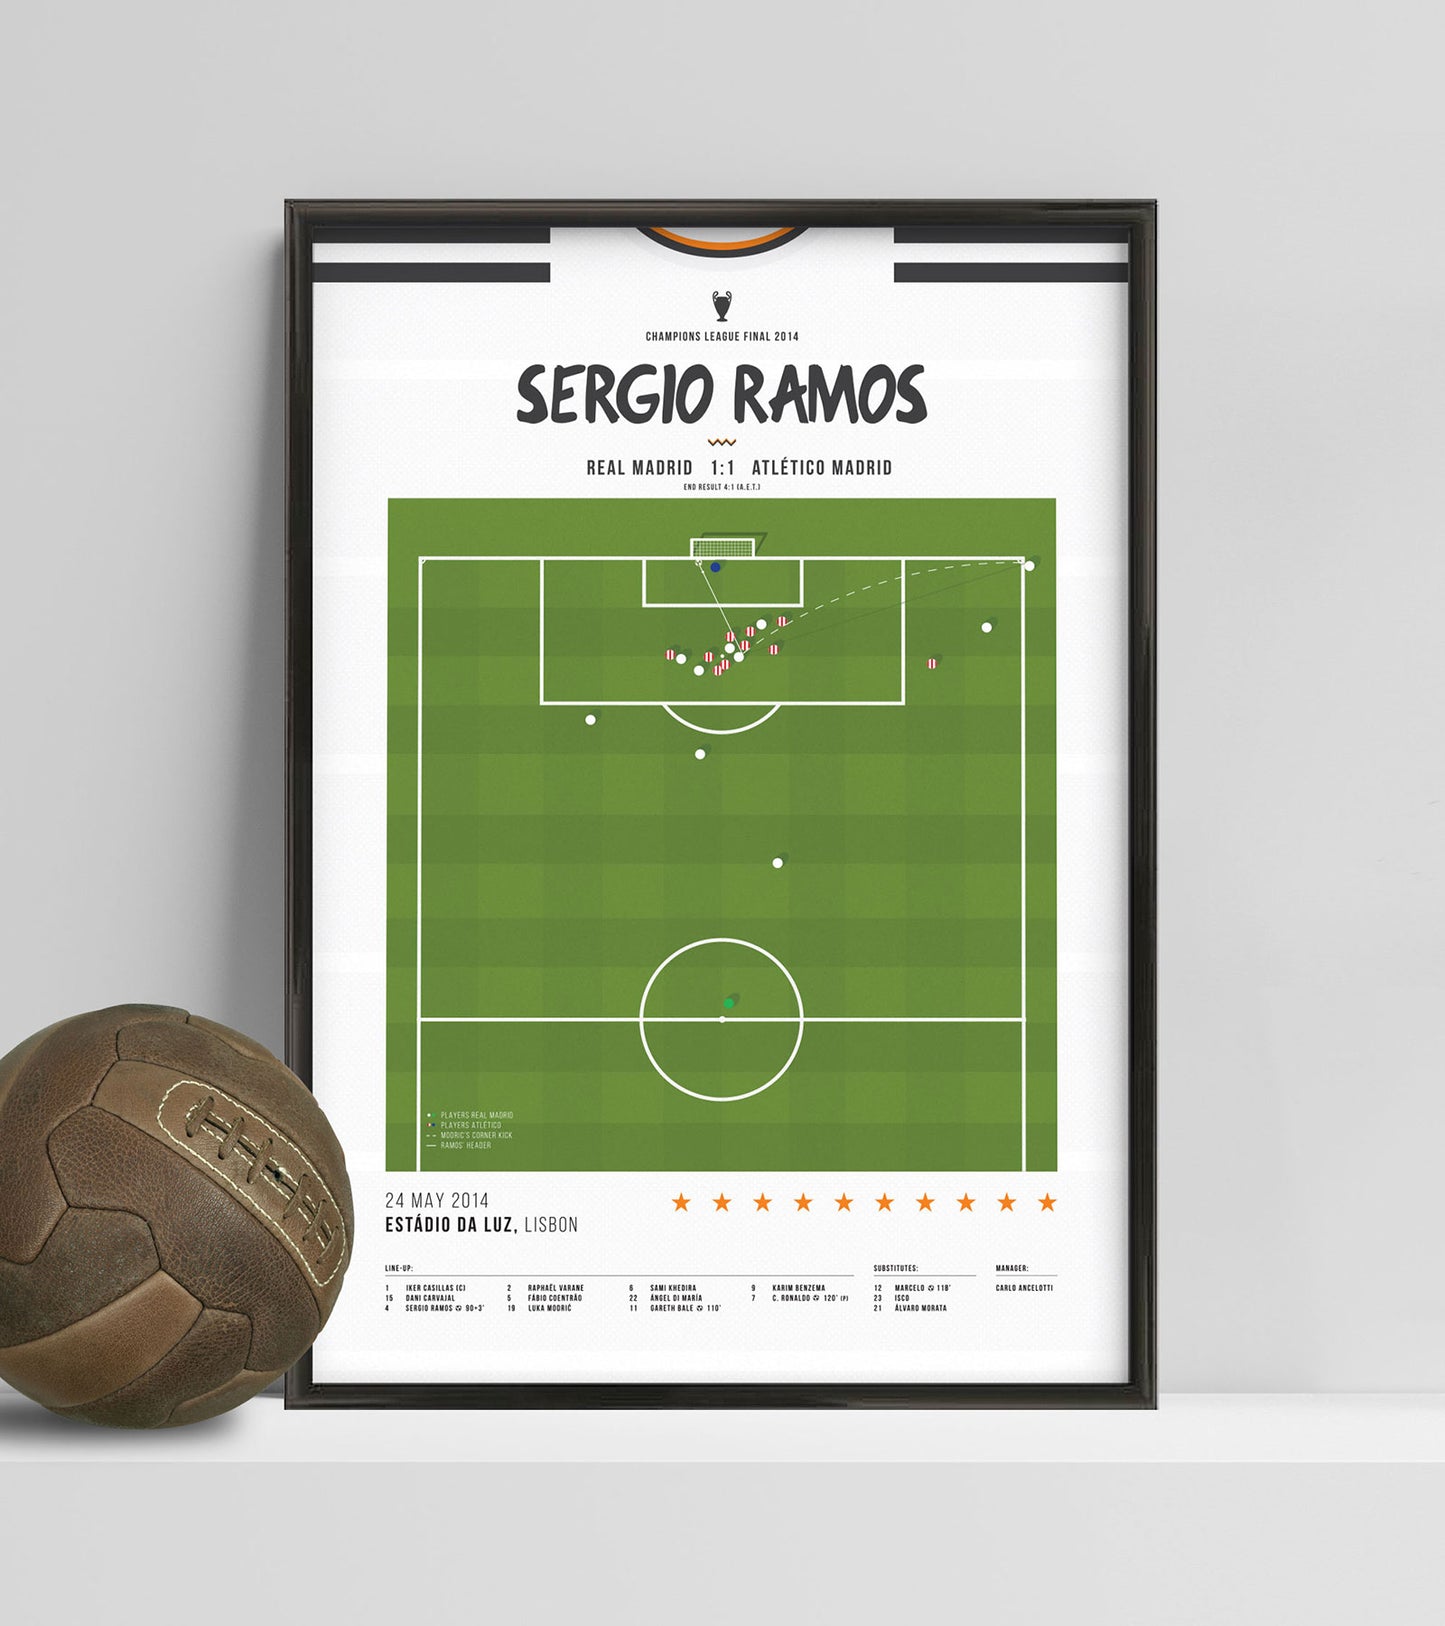 Sergio Ramos' "La Décima" goal